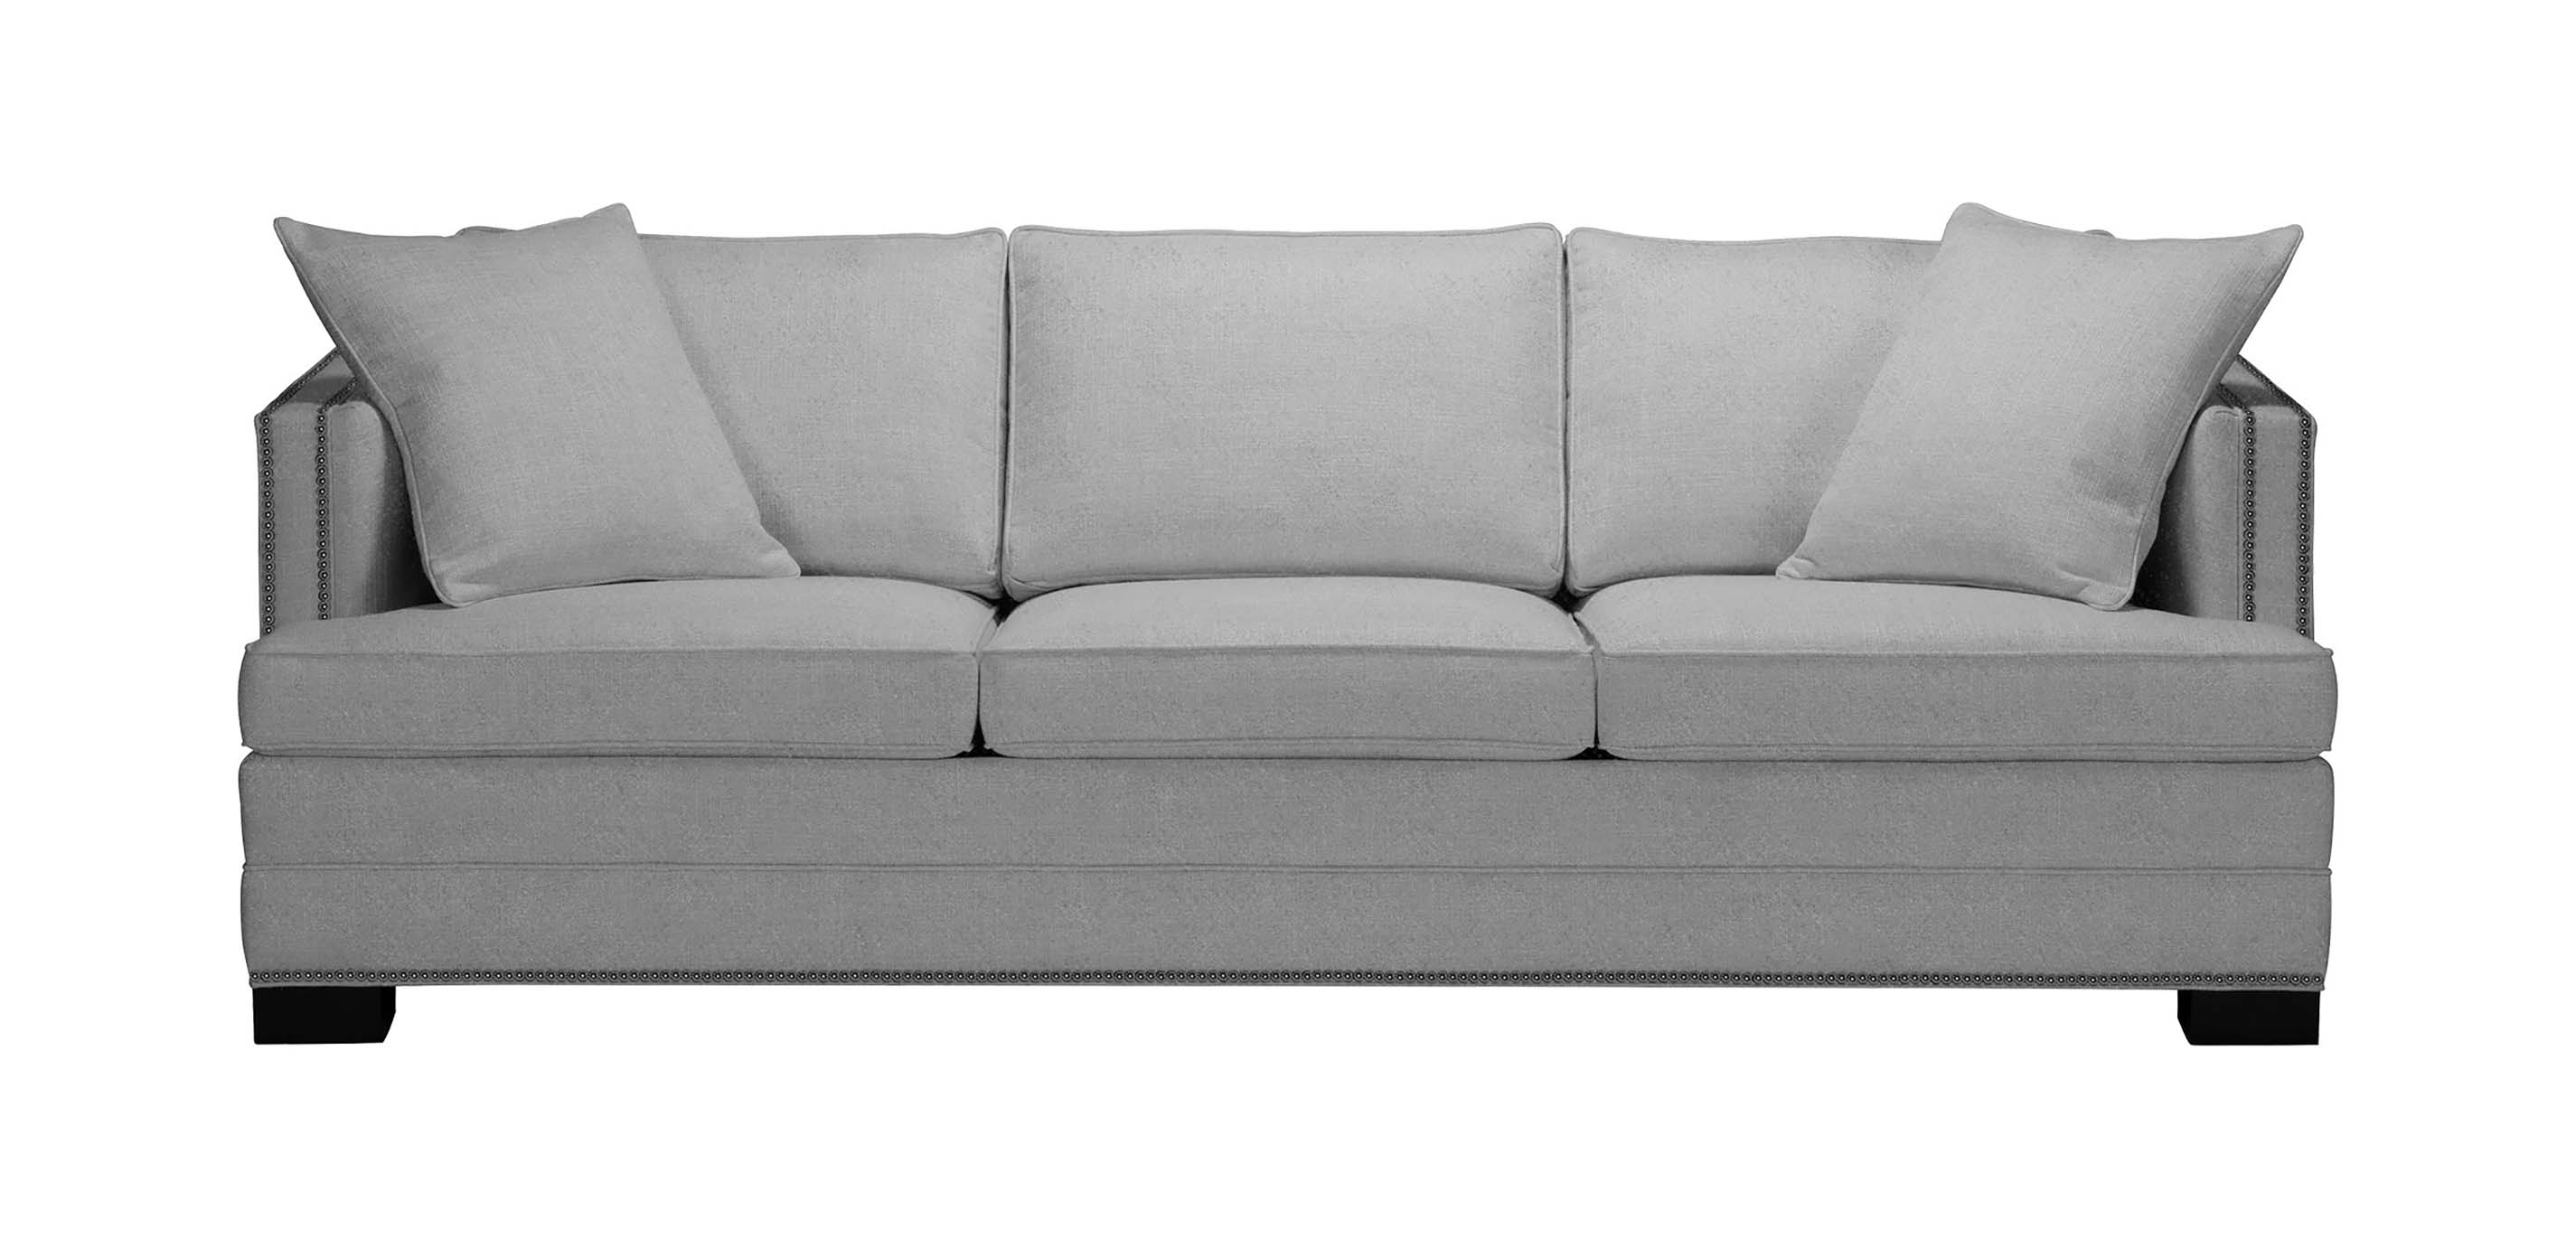 astor jewel leather sofa